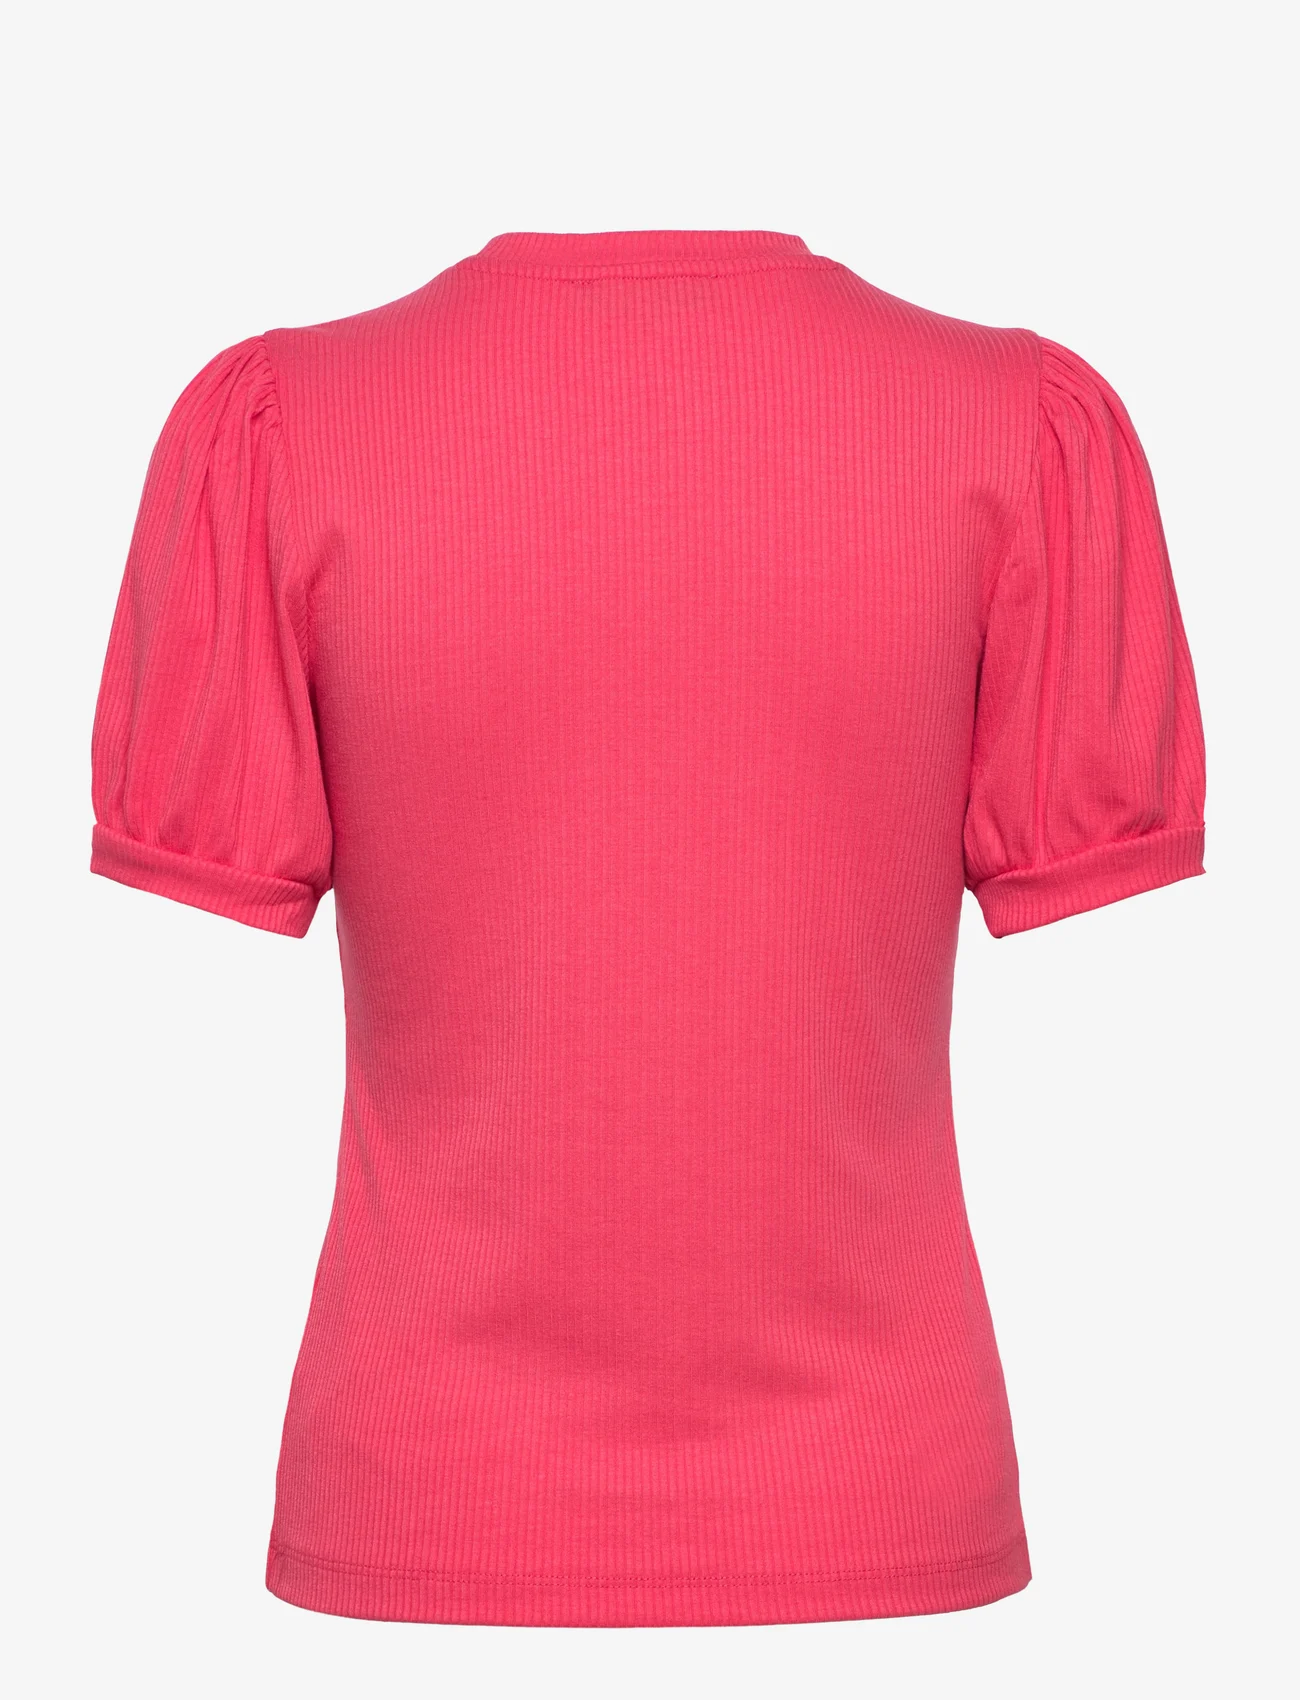 Minus - Johanna T-shirt - laagste prijzen - teaberry pink - 1